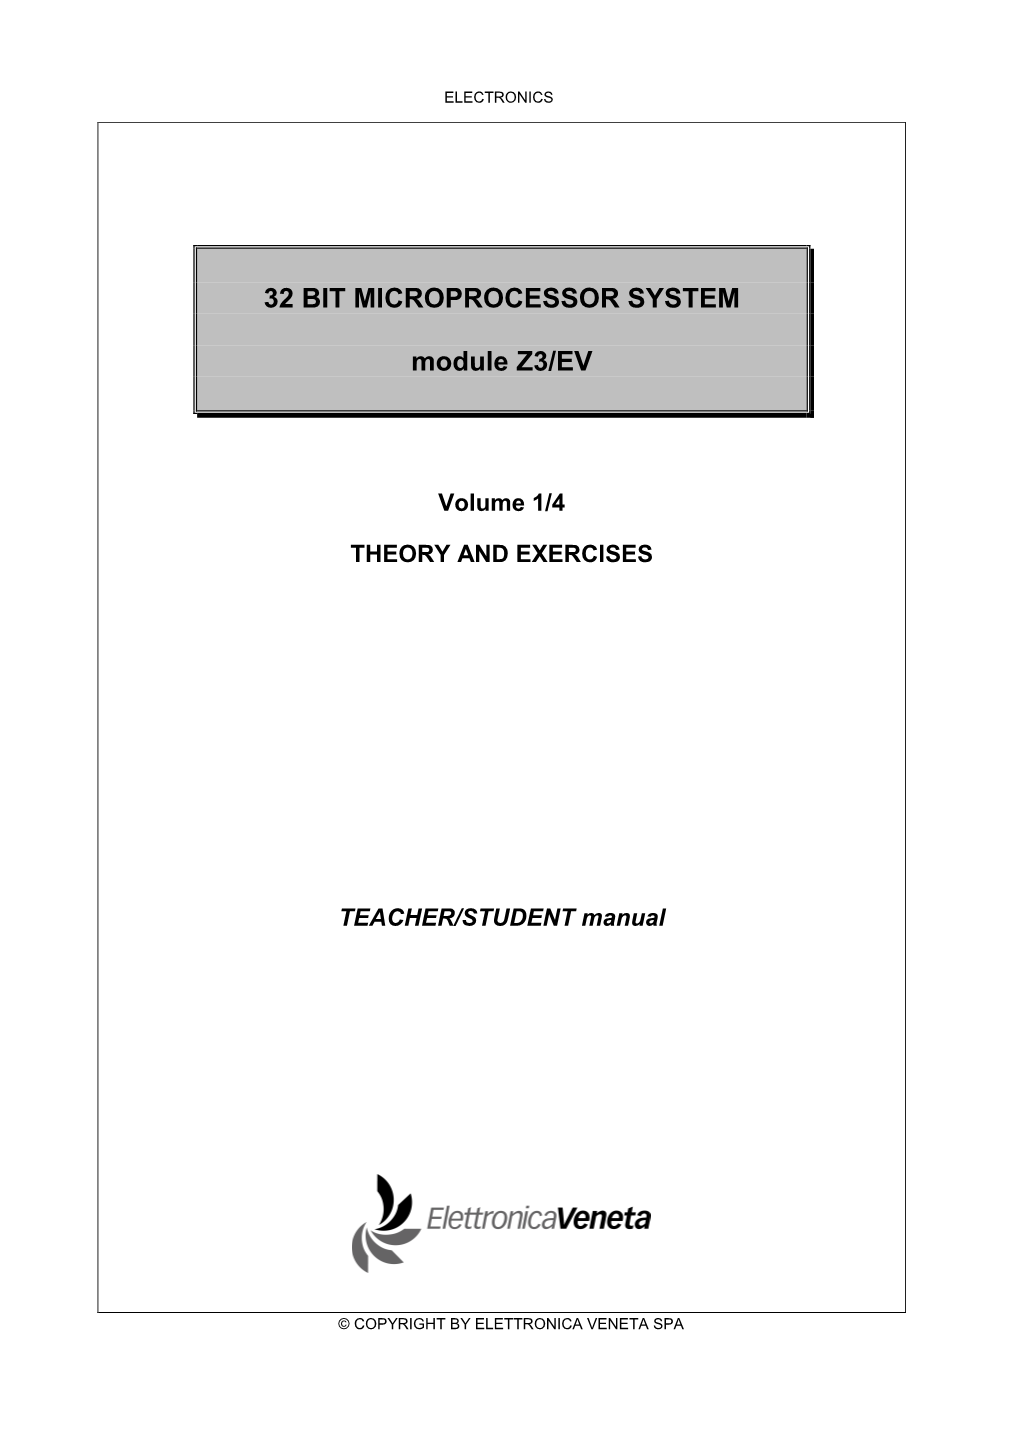 32 BIT MICROPROCESSOR SYSTEM Module Z3/EV